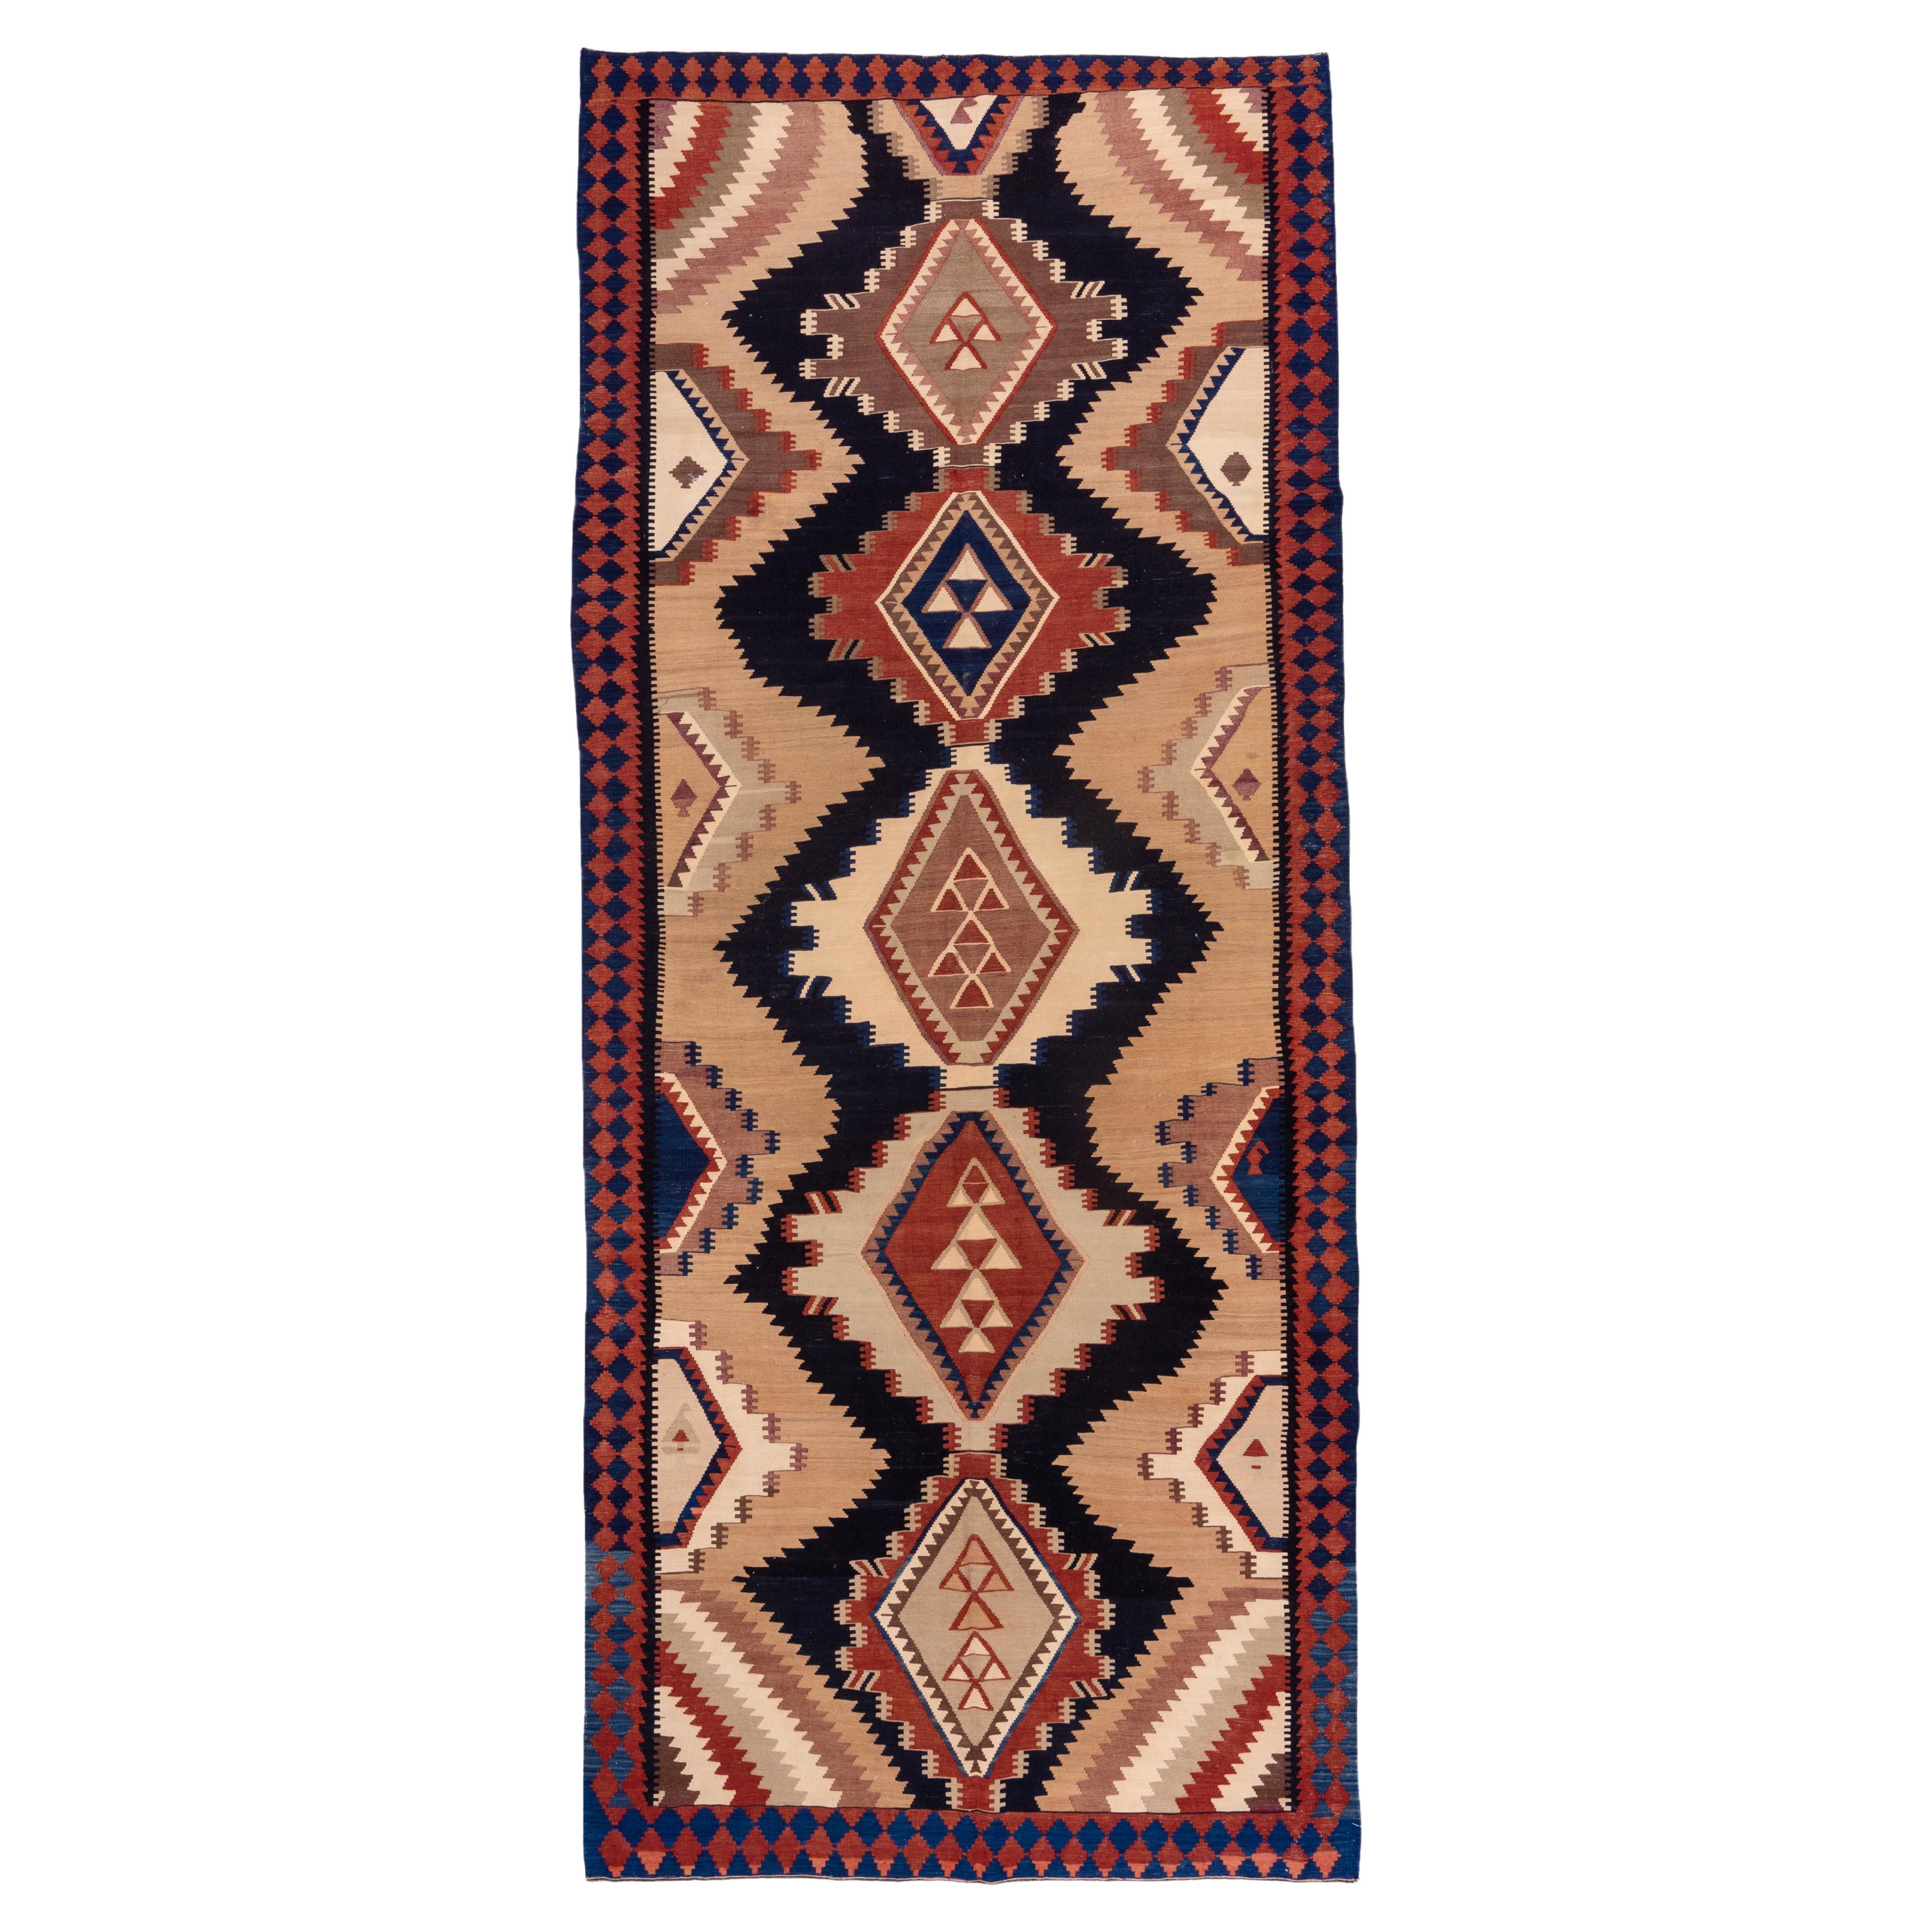 Unusual Antique Northwest Persian Kilim Rug, Navajo Style, Bold Color Palette